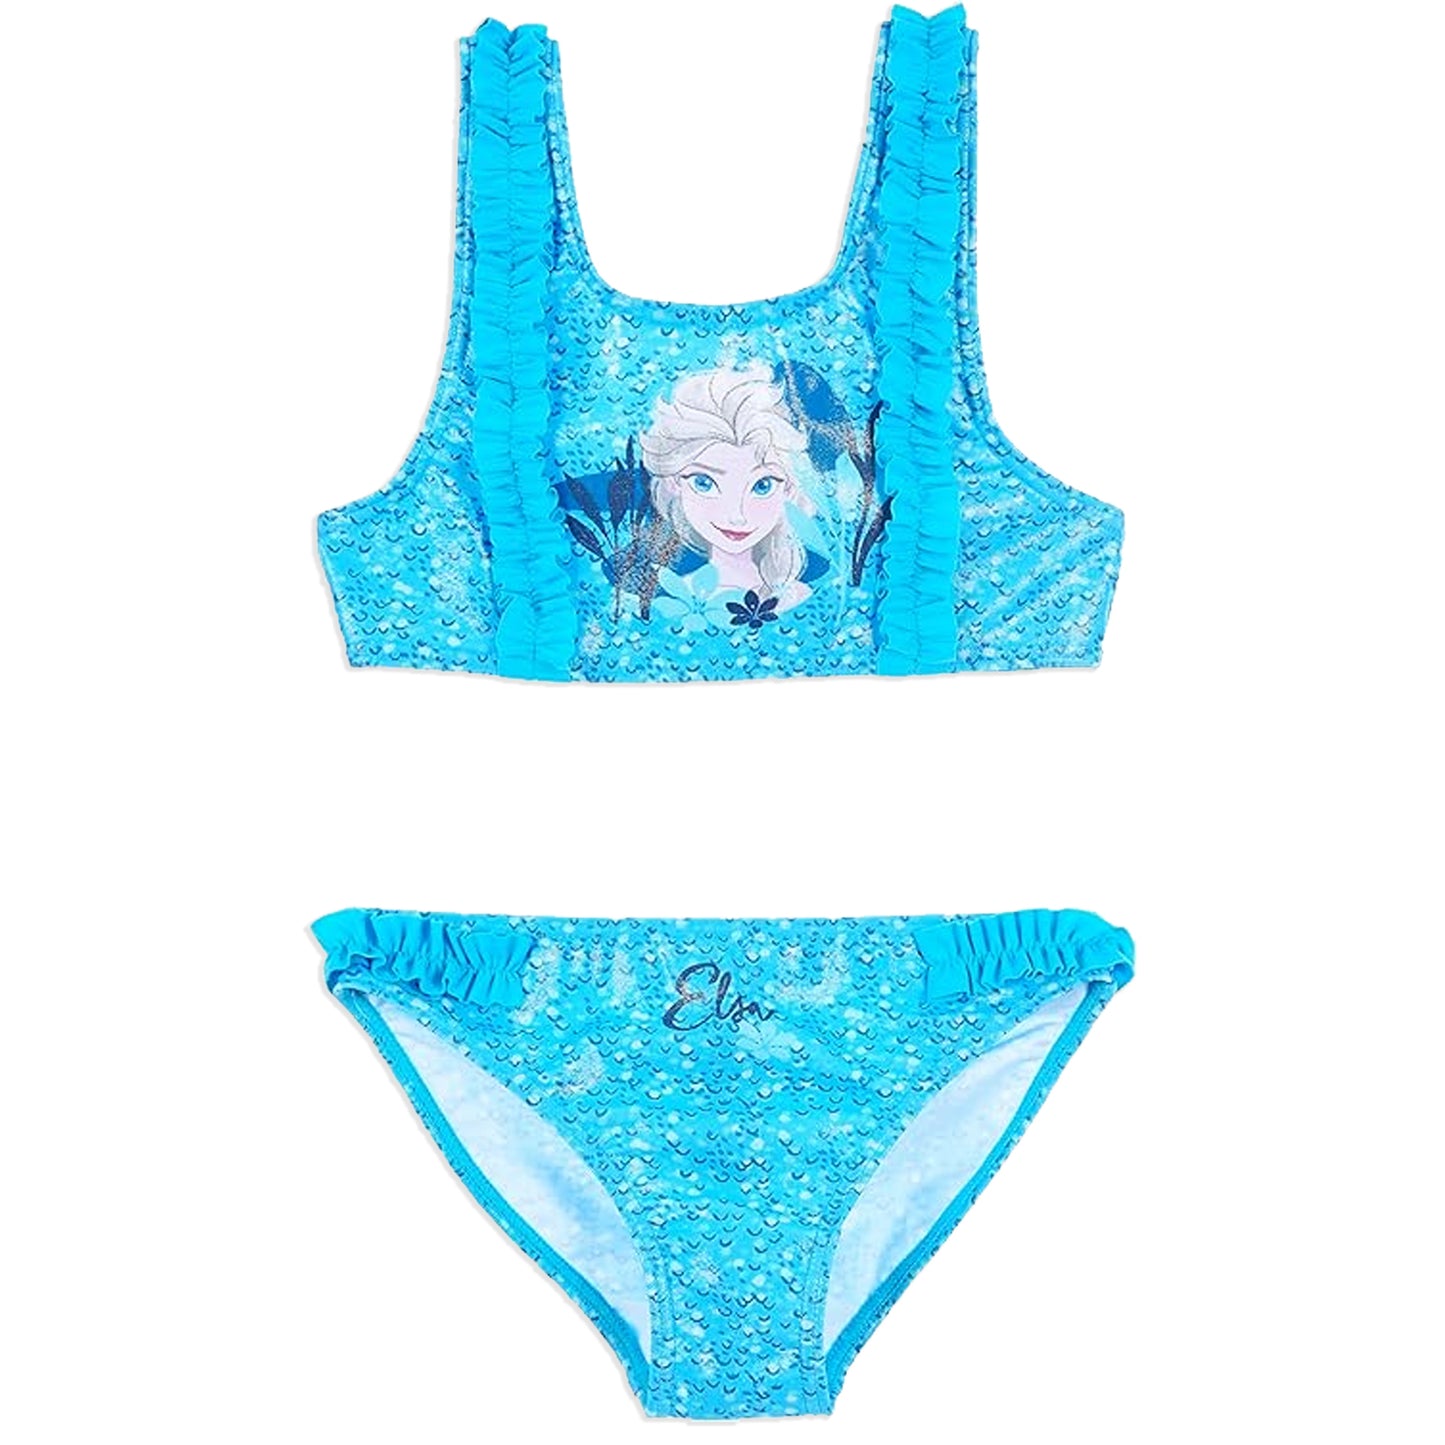 Disney Frozen Elsa Swimming Costume Bikini for Girls